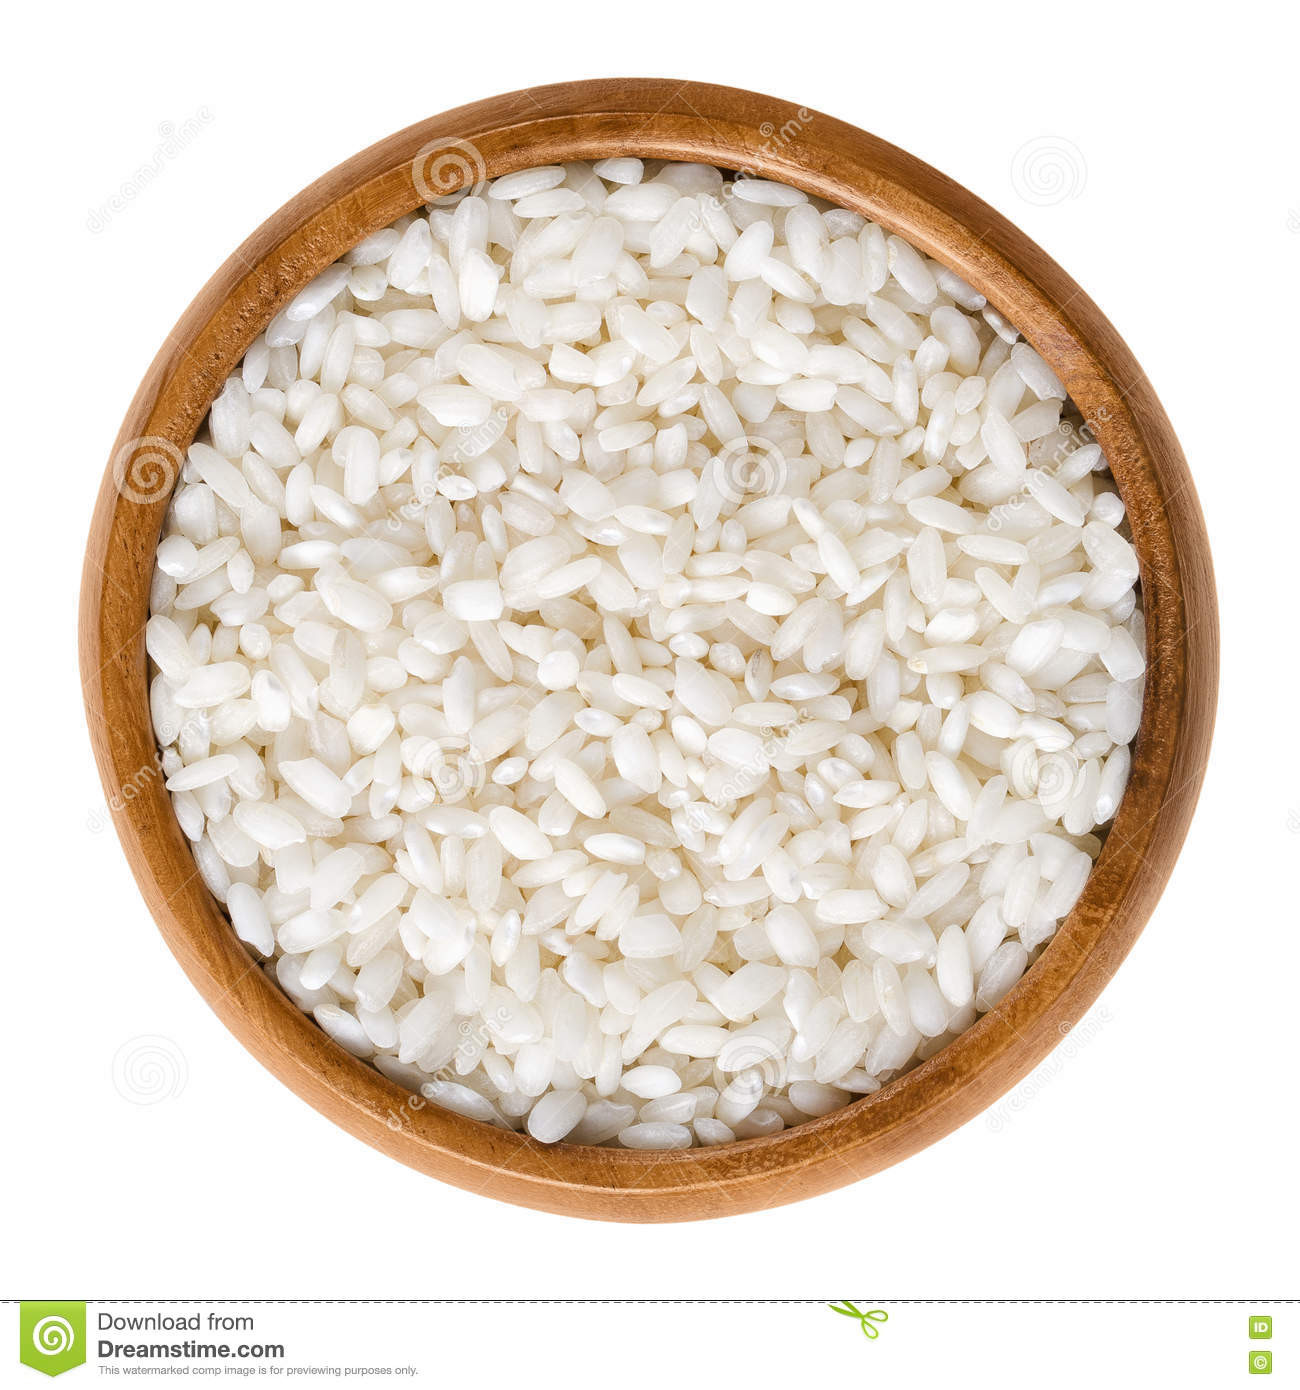 Grain Used In Risotto
 Arborio Risotto Rice In Wooden Bowl Over White Stock Image